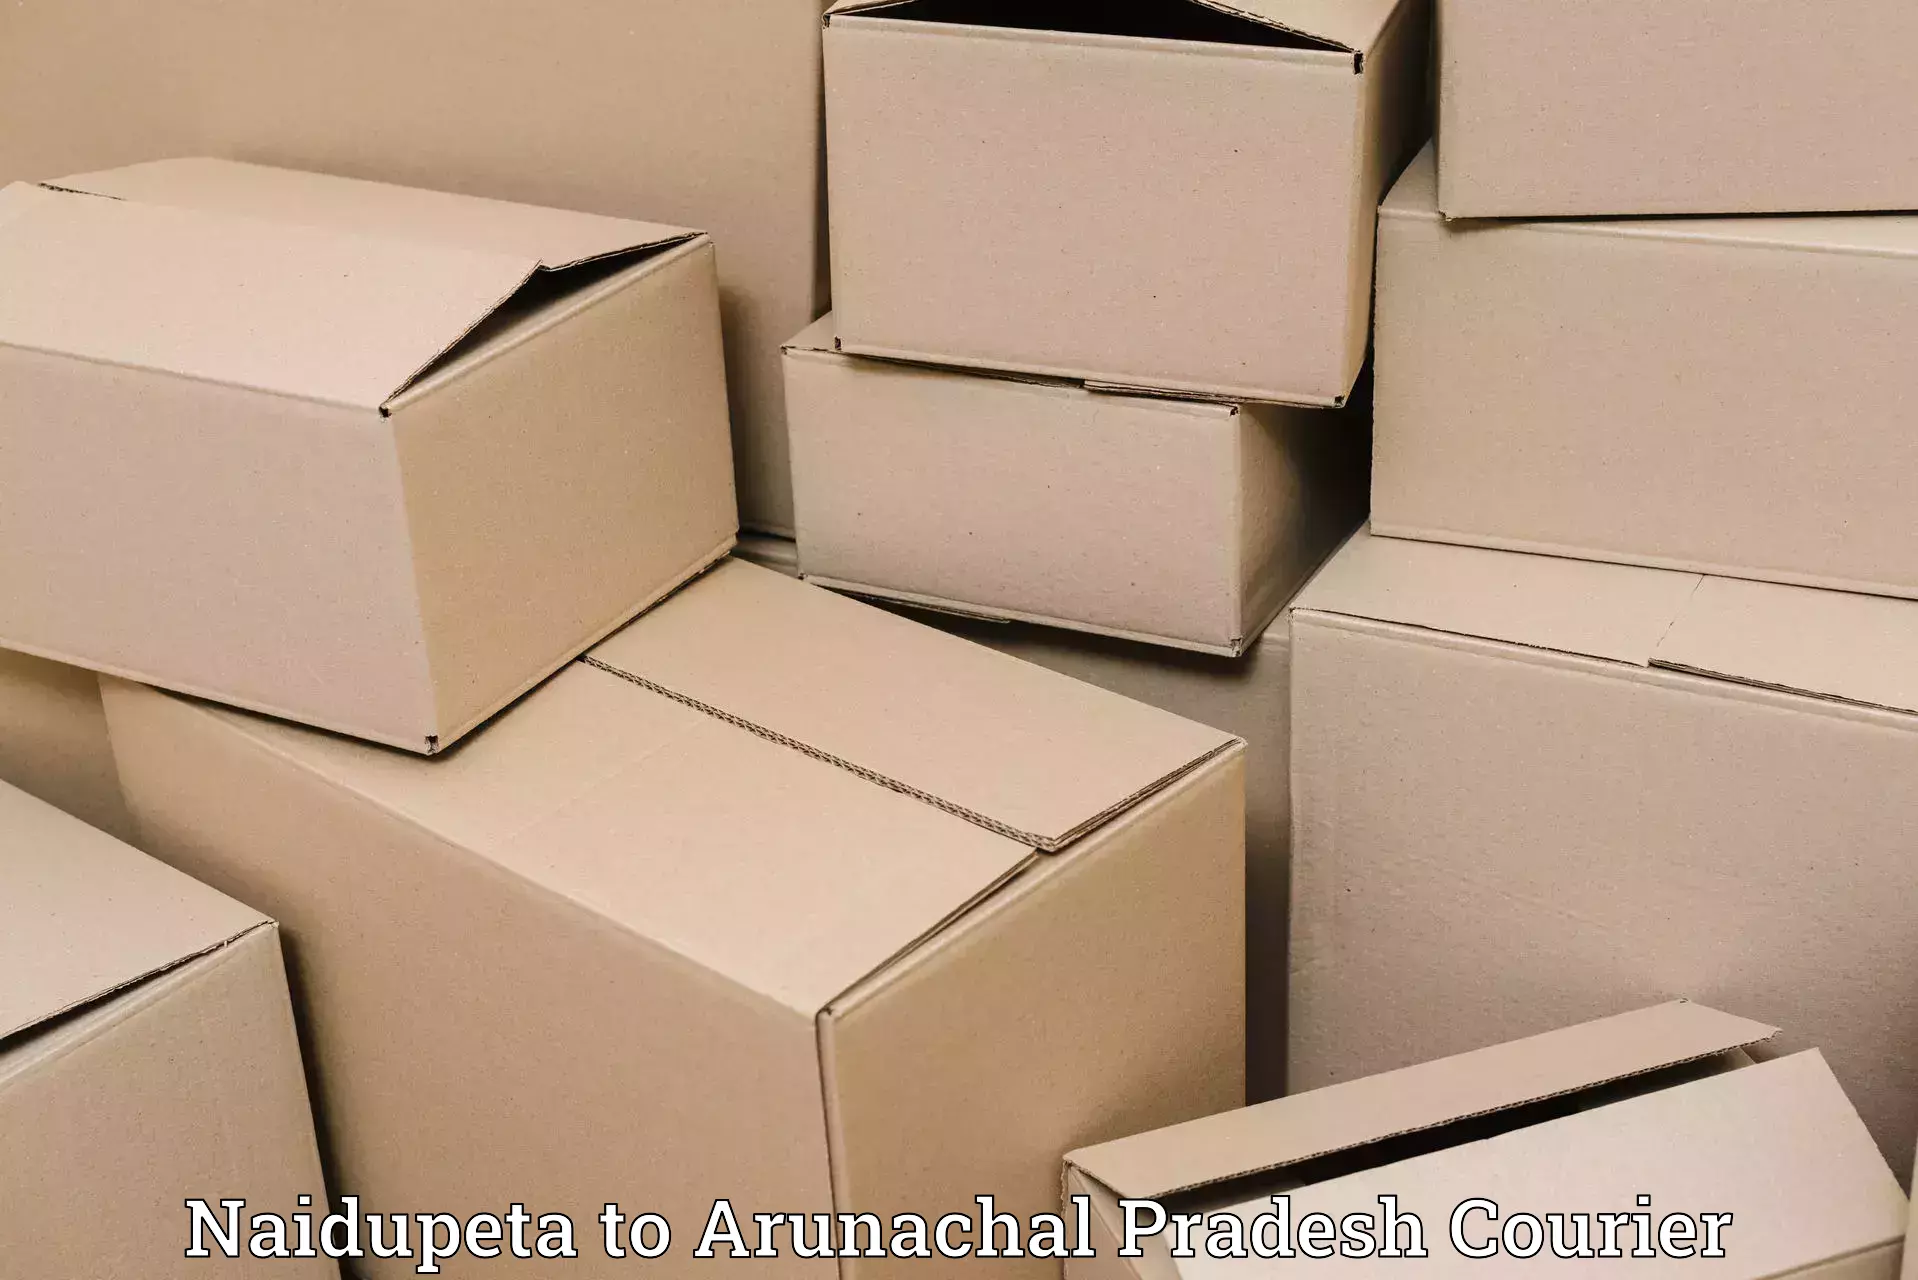 Express delivery capabilities in Naidupeta to Arunachal Pradesh